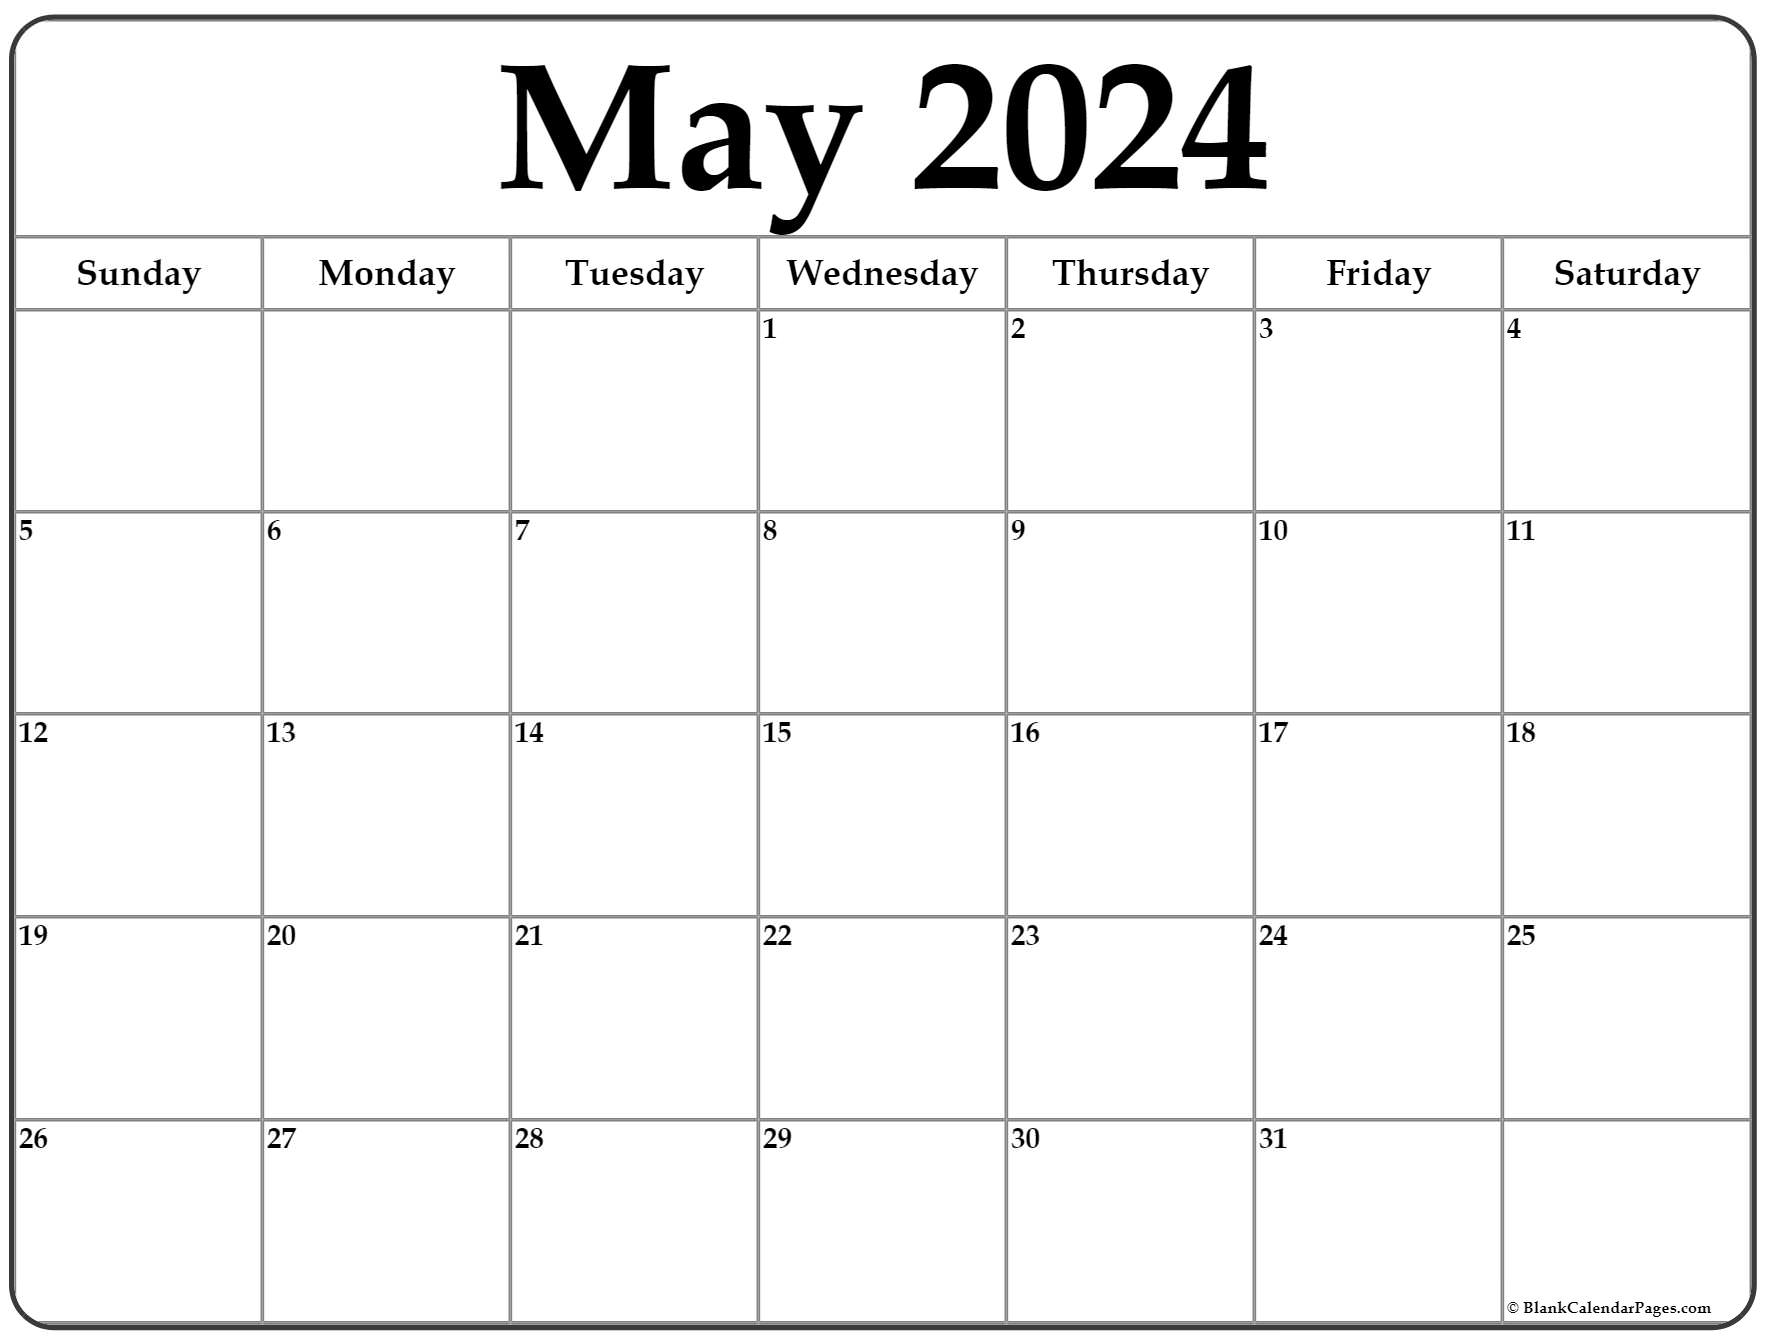 may 2023 calendar free printable monthly calendars